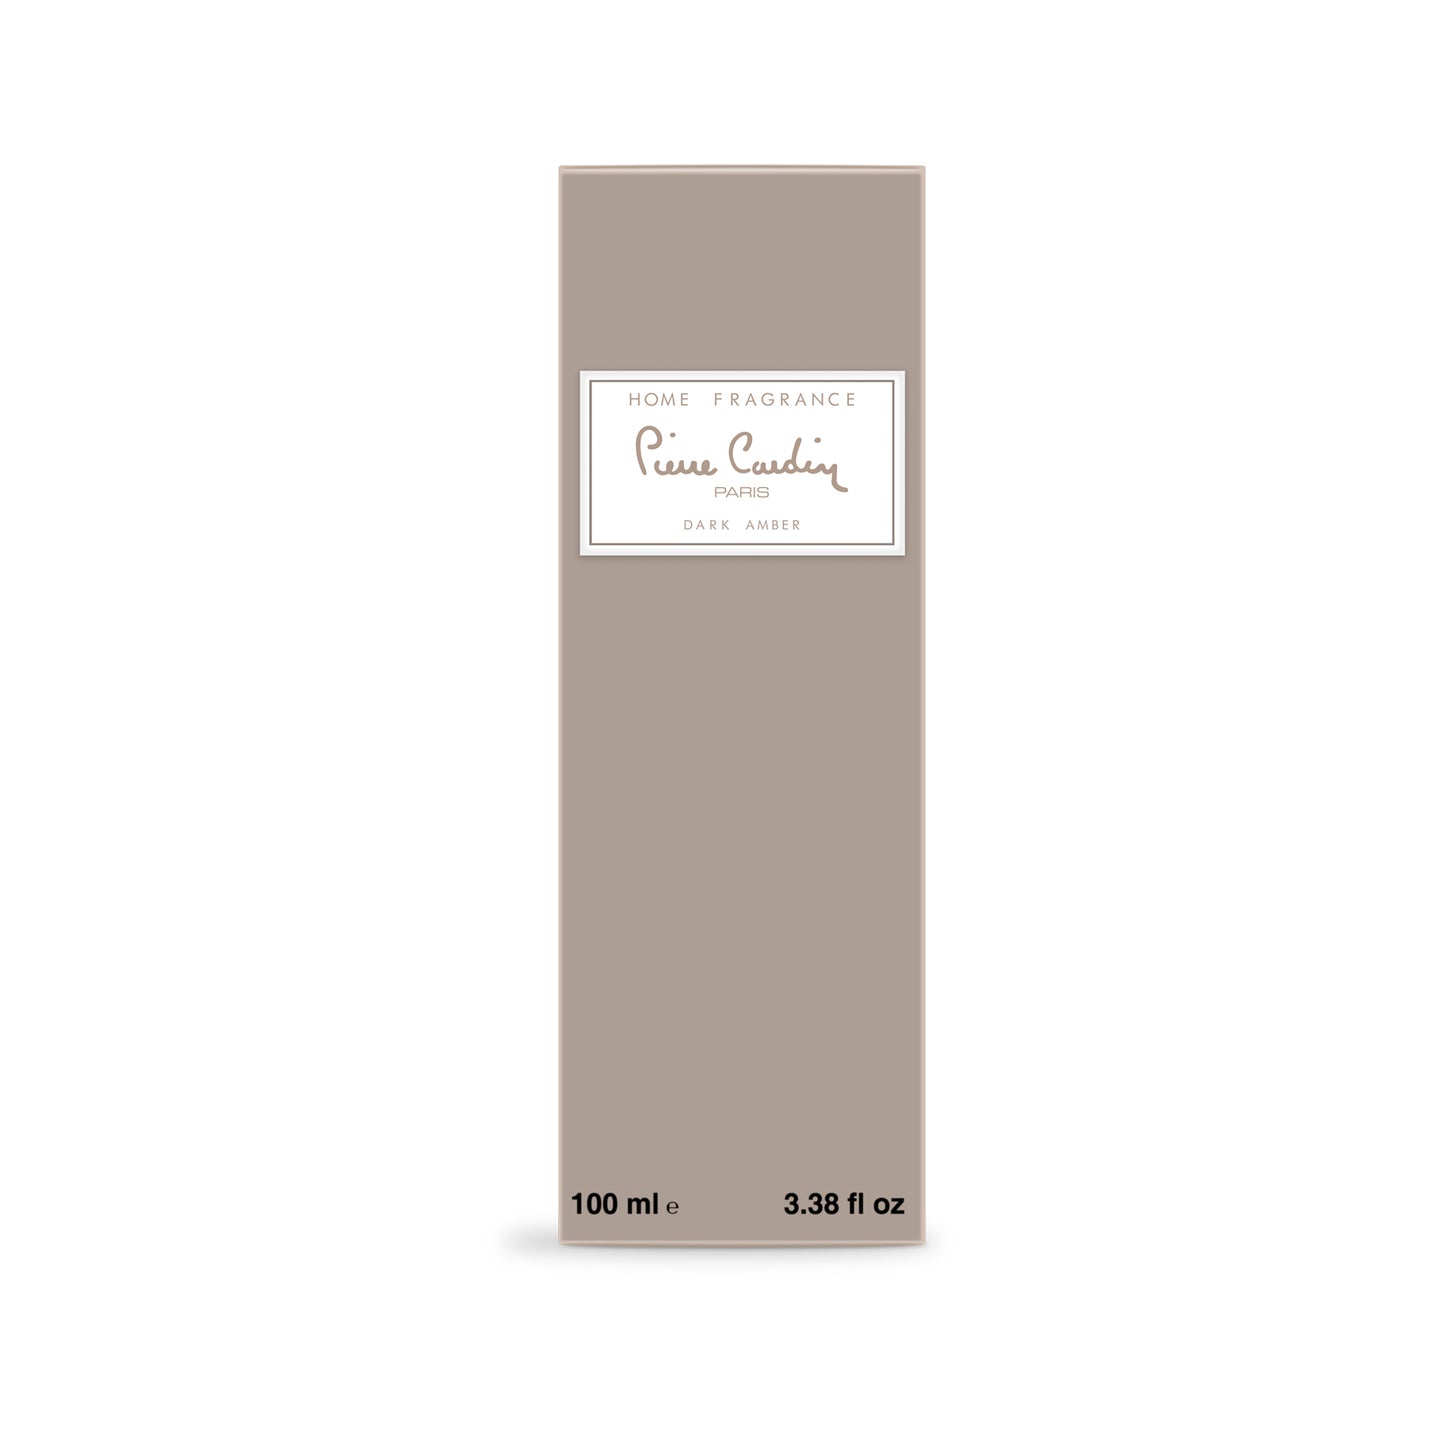 Pierre Cardin Home Fragrance - DARK AMBER 100 ml